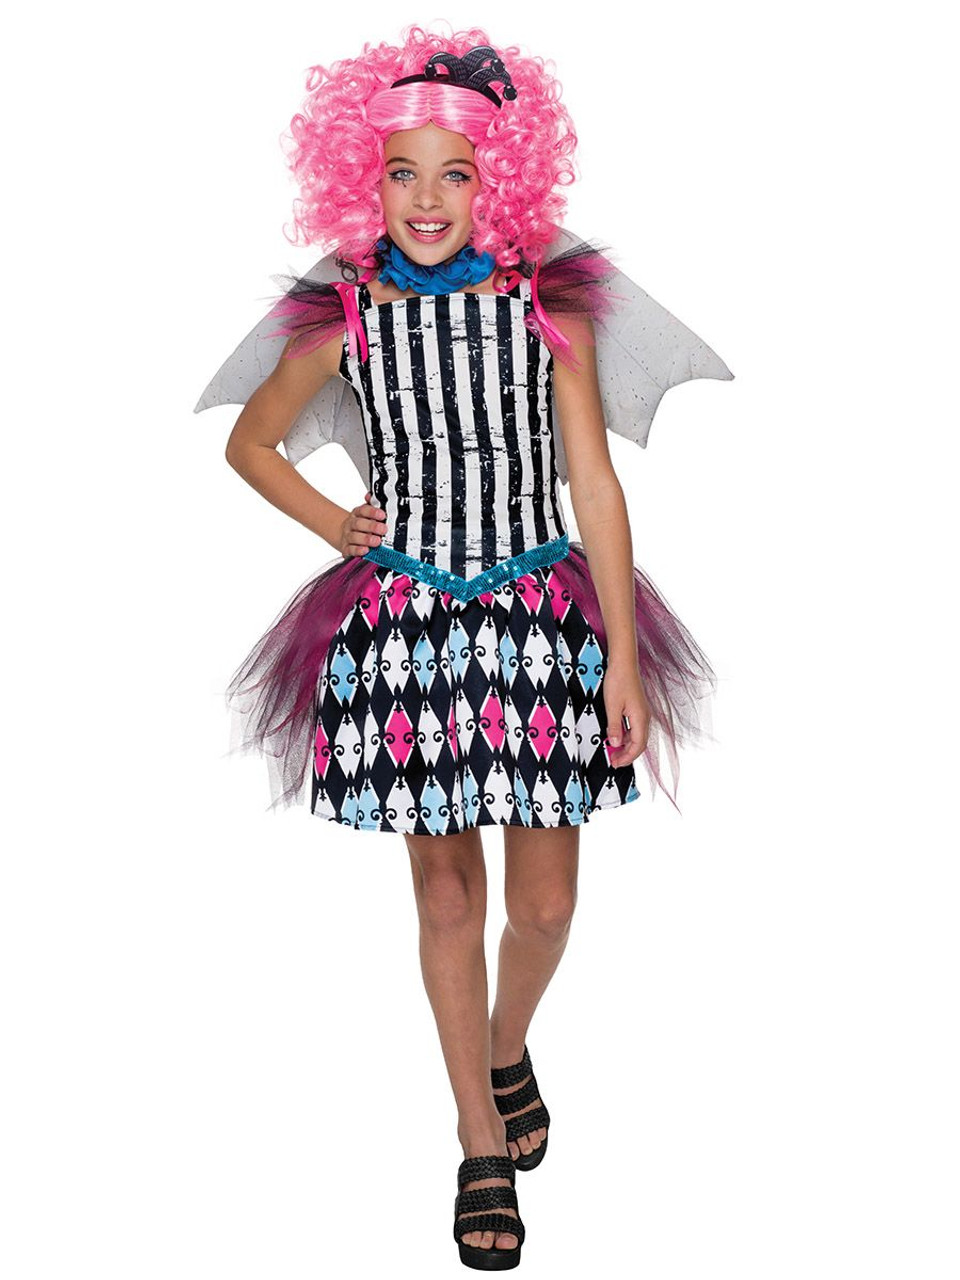 Monster High Rochelle Goyle Costume - Pink Princess